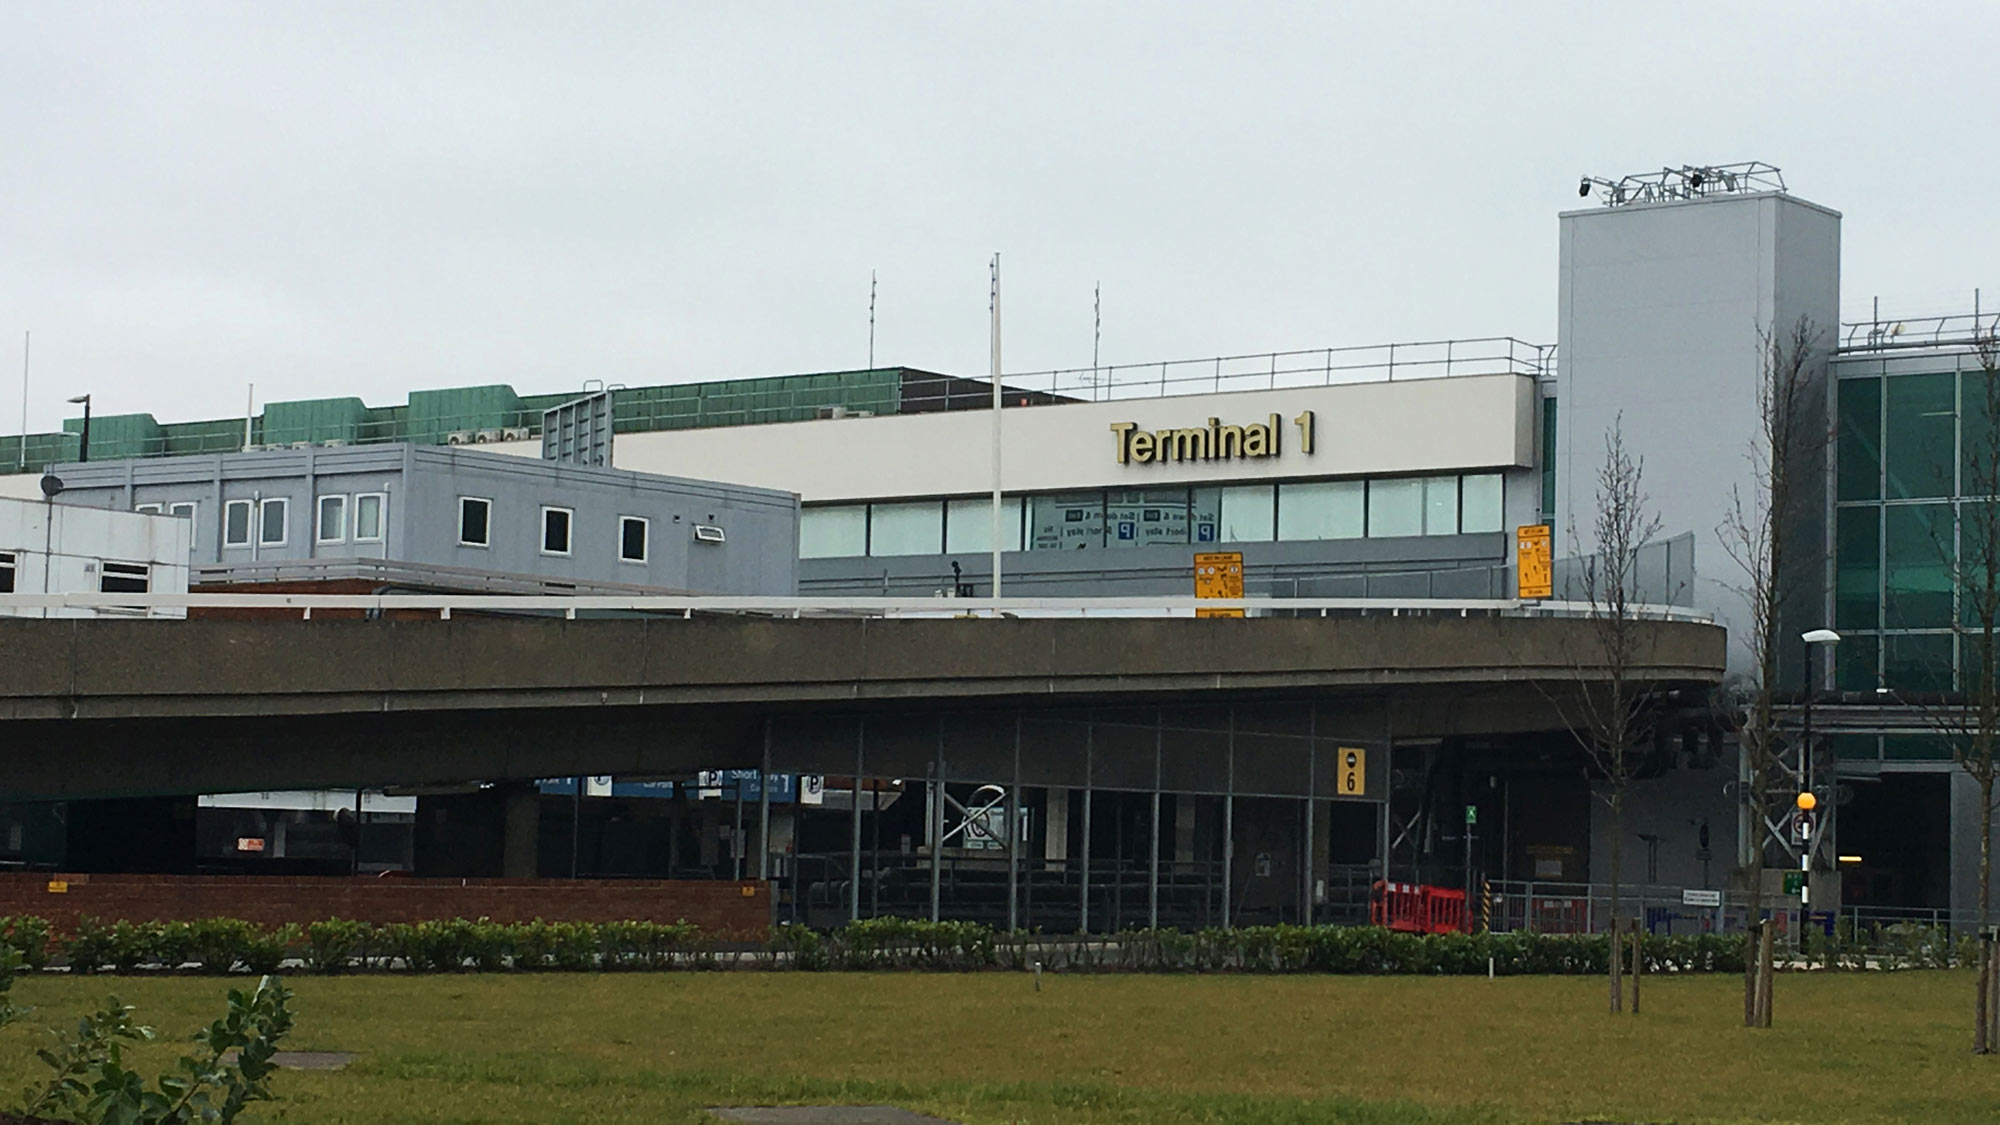 Terminal 1 at Heathrow